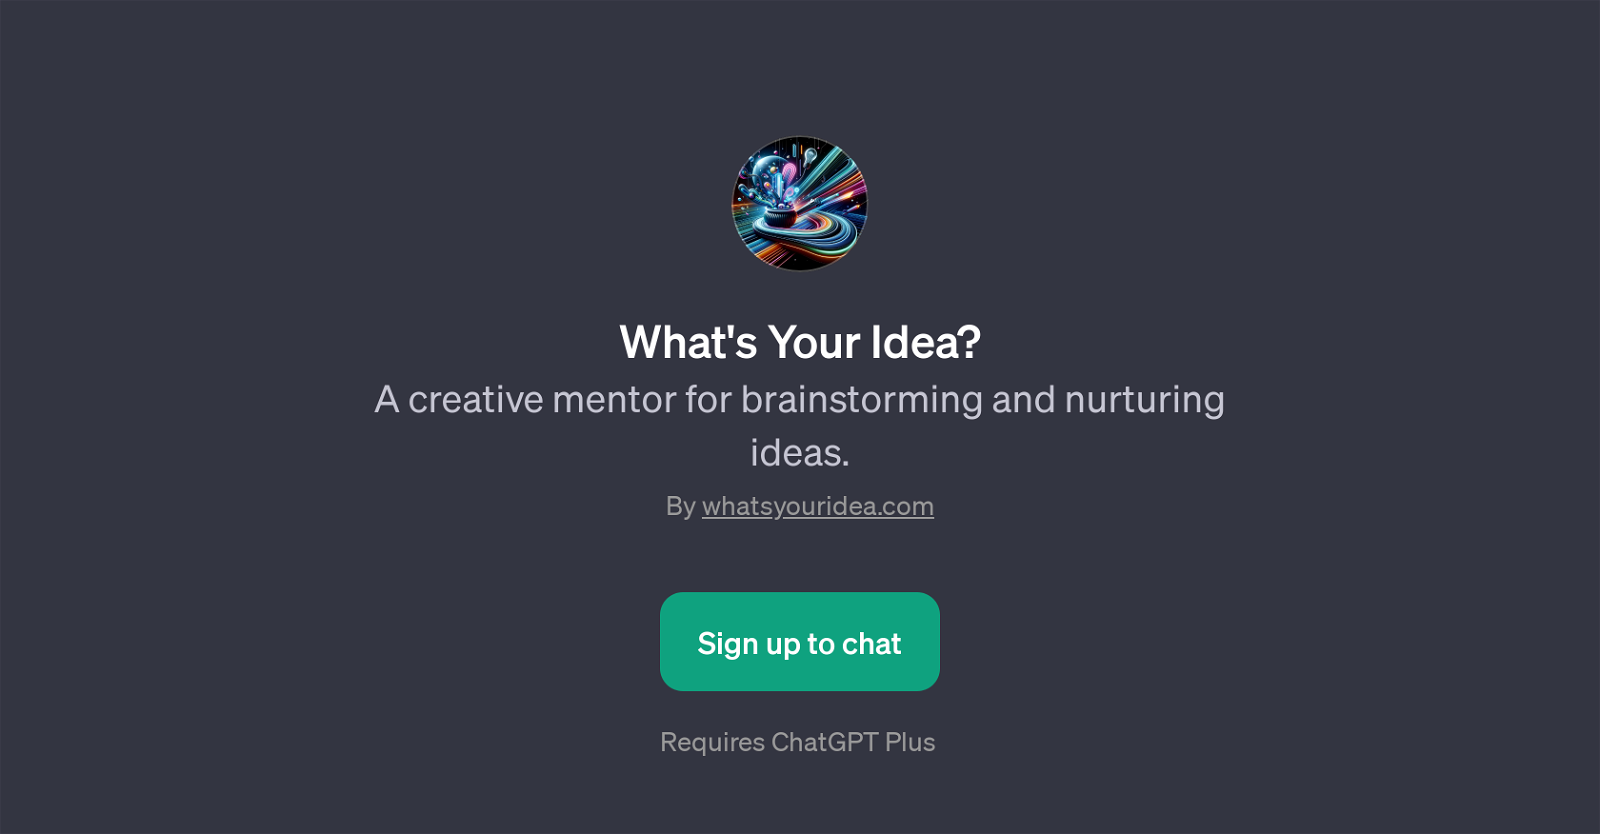 What's Your Idea? website